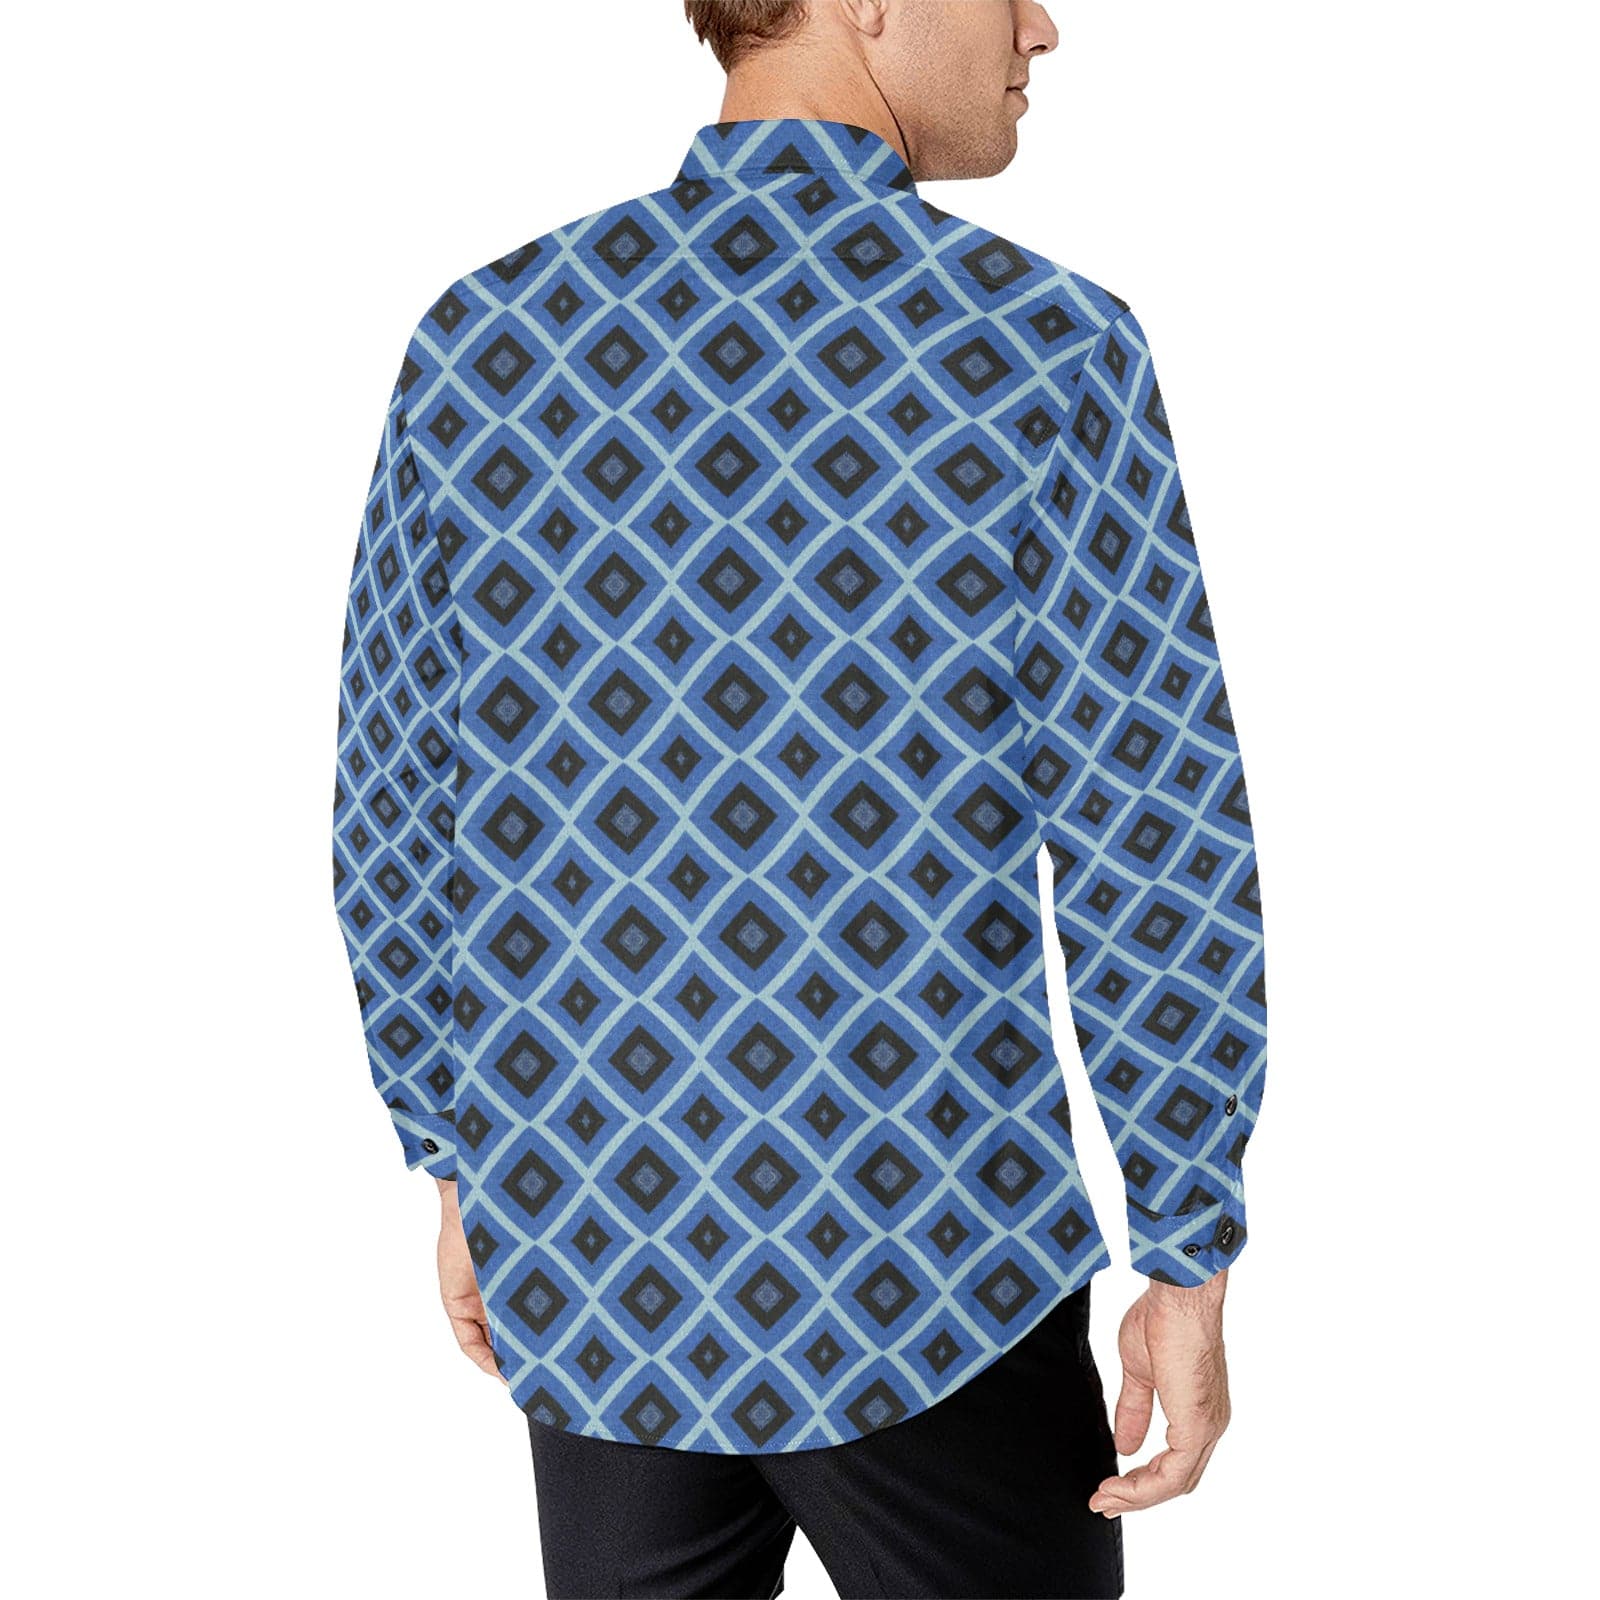 Gennosuke Inspired Black and Blue Patterned Men's Long Sleeve Shirt